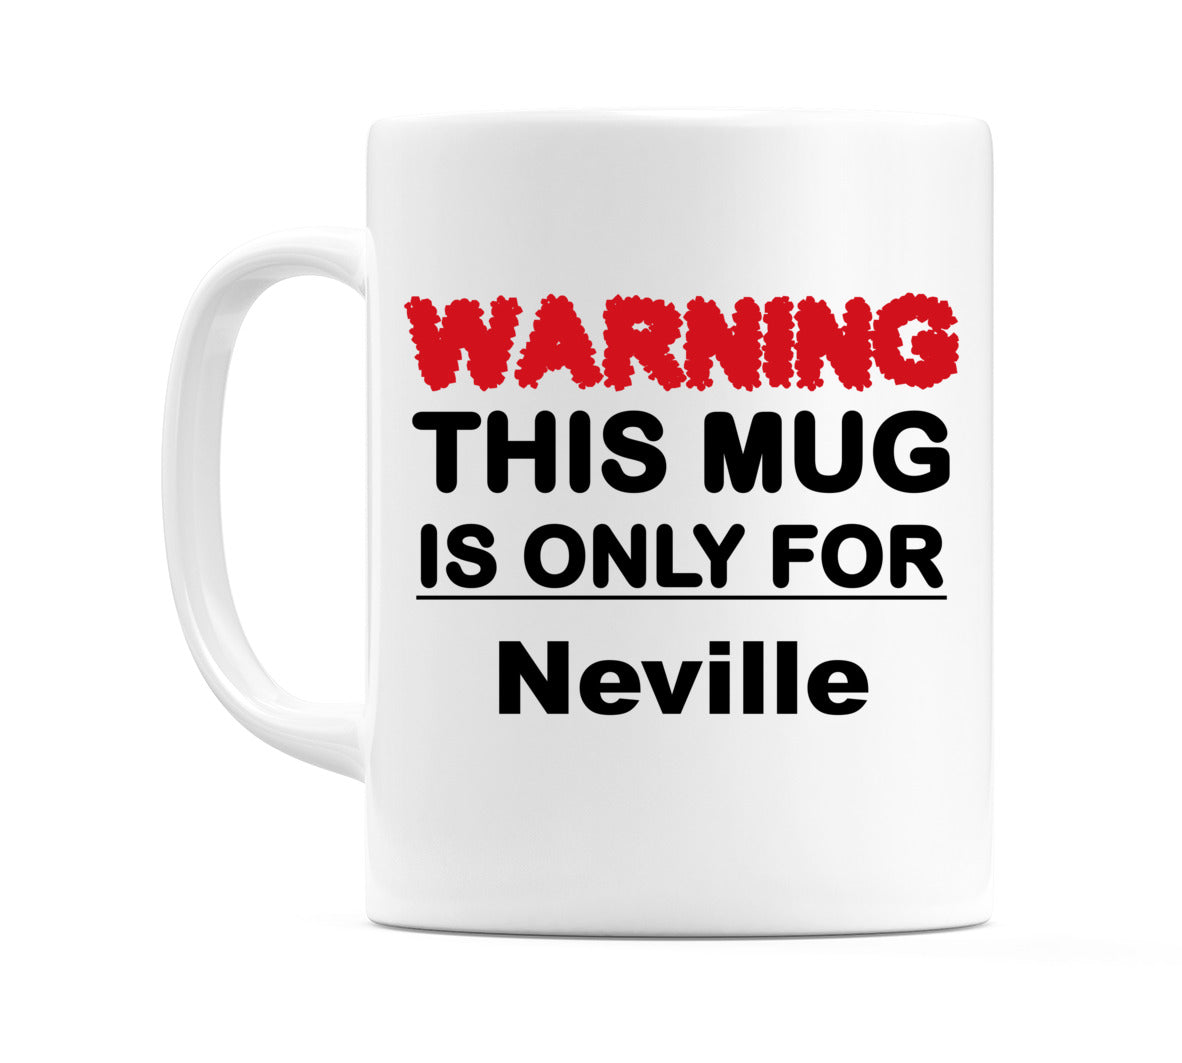 Warning This Mug is ONLY for Neville Mug